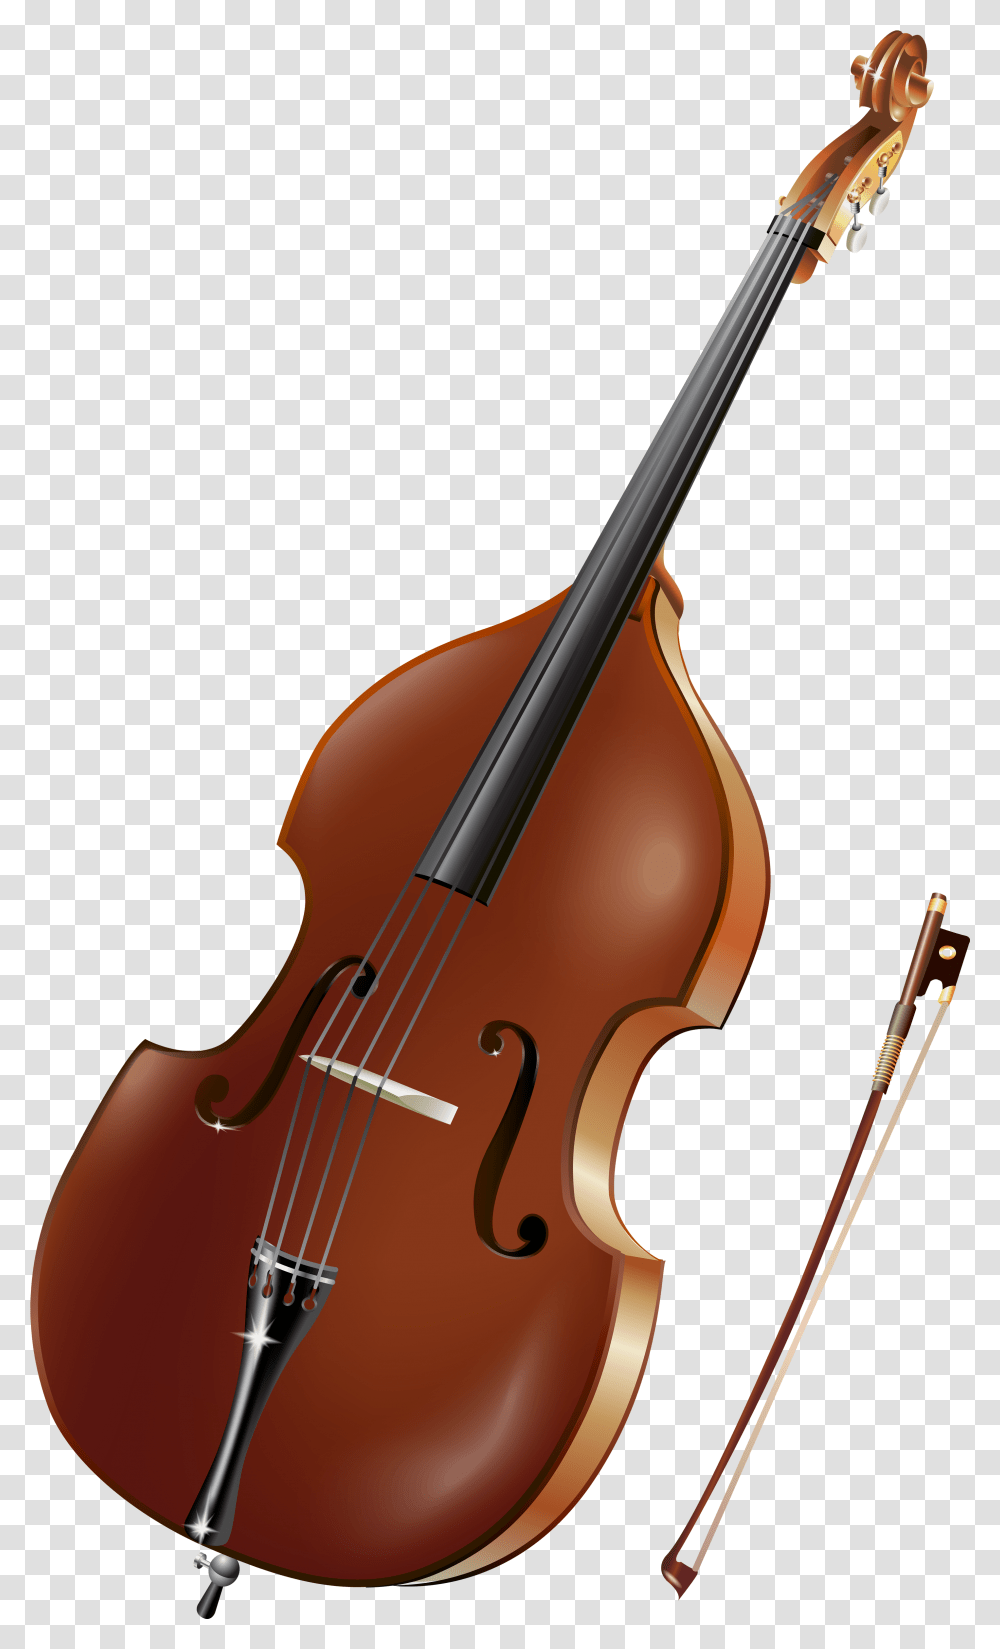 Double Bass Violin Musical Instruments Cello Clip Art Harp Double Bass Images Hd, Leisure Activities Transparent Png